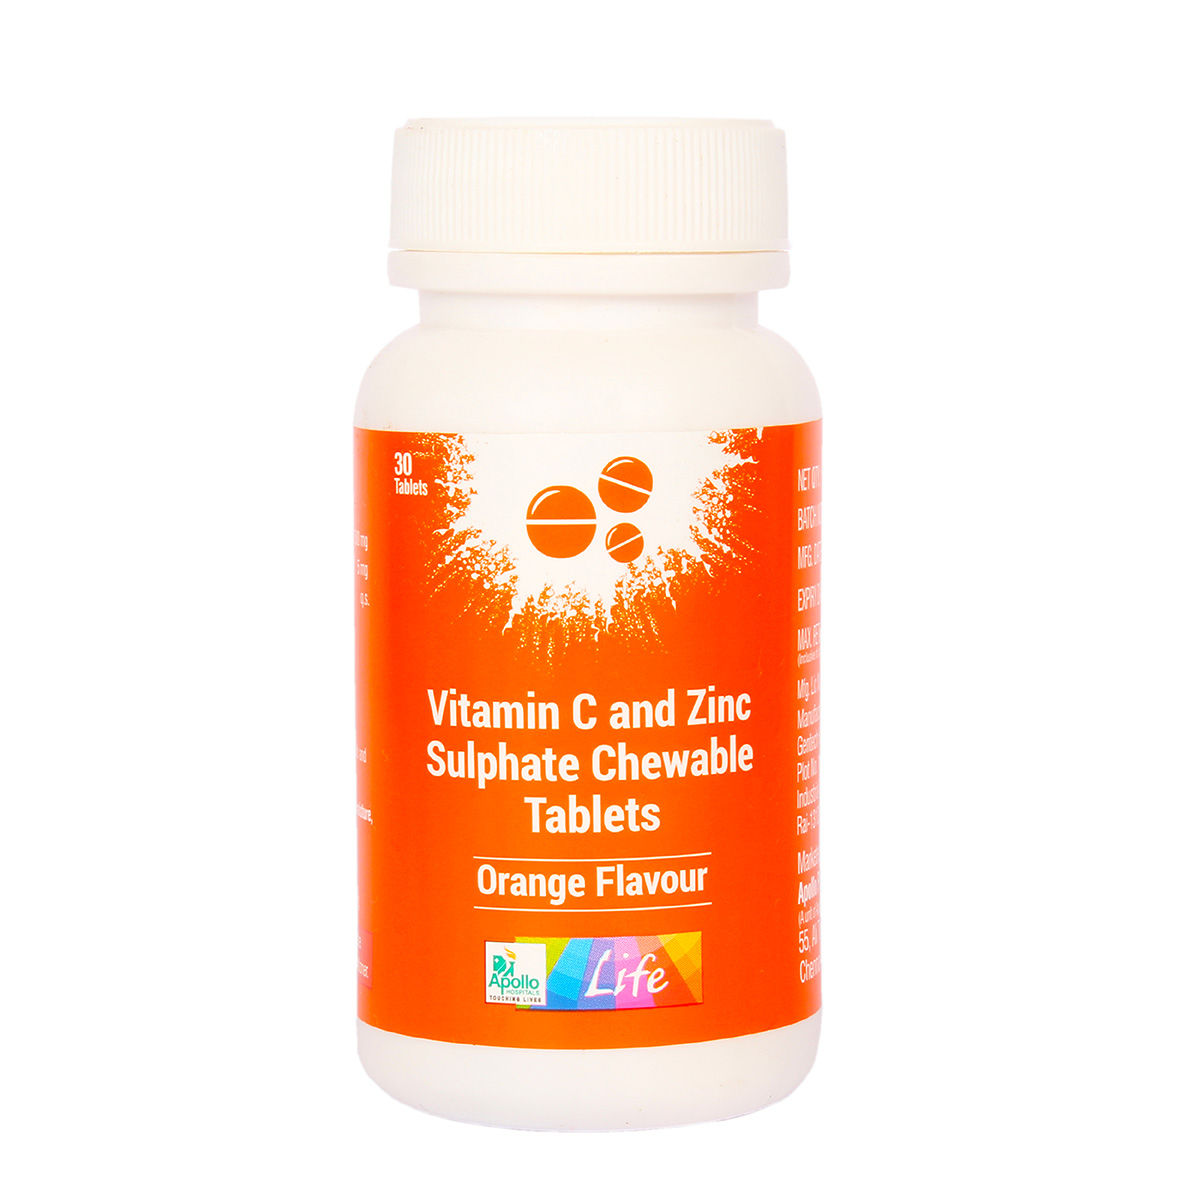 Buy Apollo Life Vitamin C & Zinc Sulphate Chewable Orange Flavour Tablets, 30 Count Online